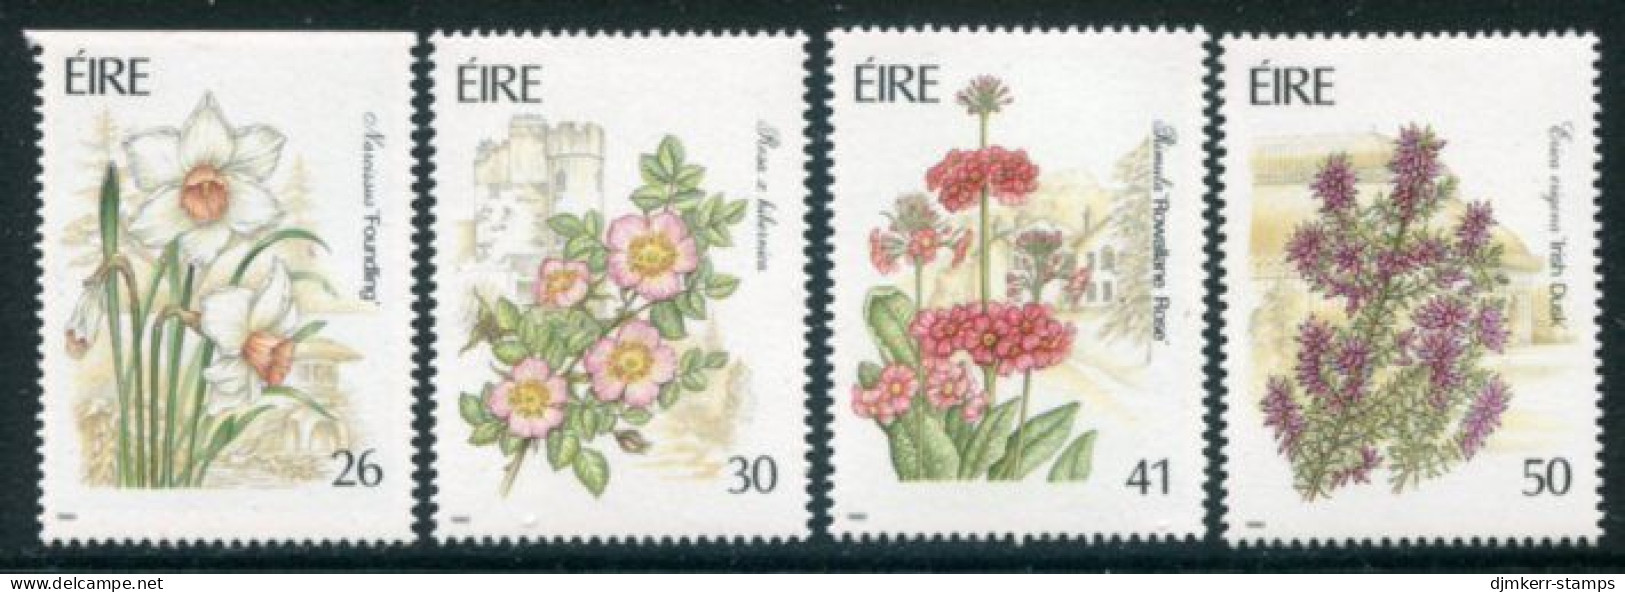 IRELAND1990 Irish Garden Flowers MNH / **.  Michel 729-732 - Nuevos